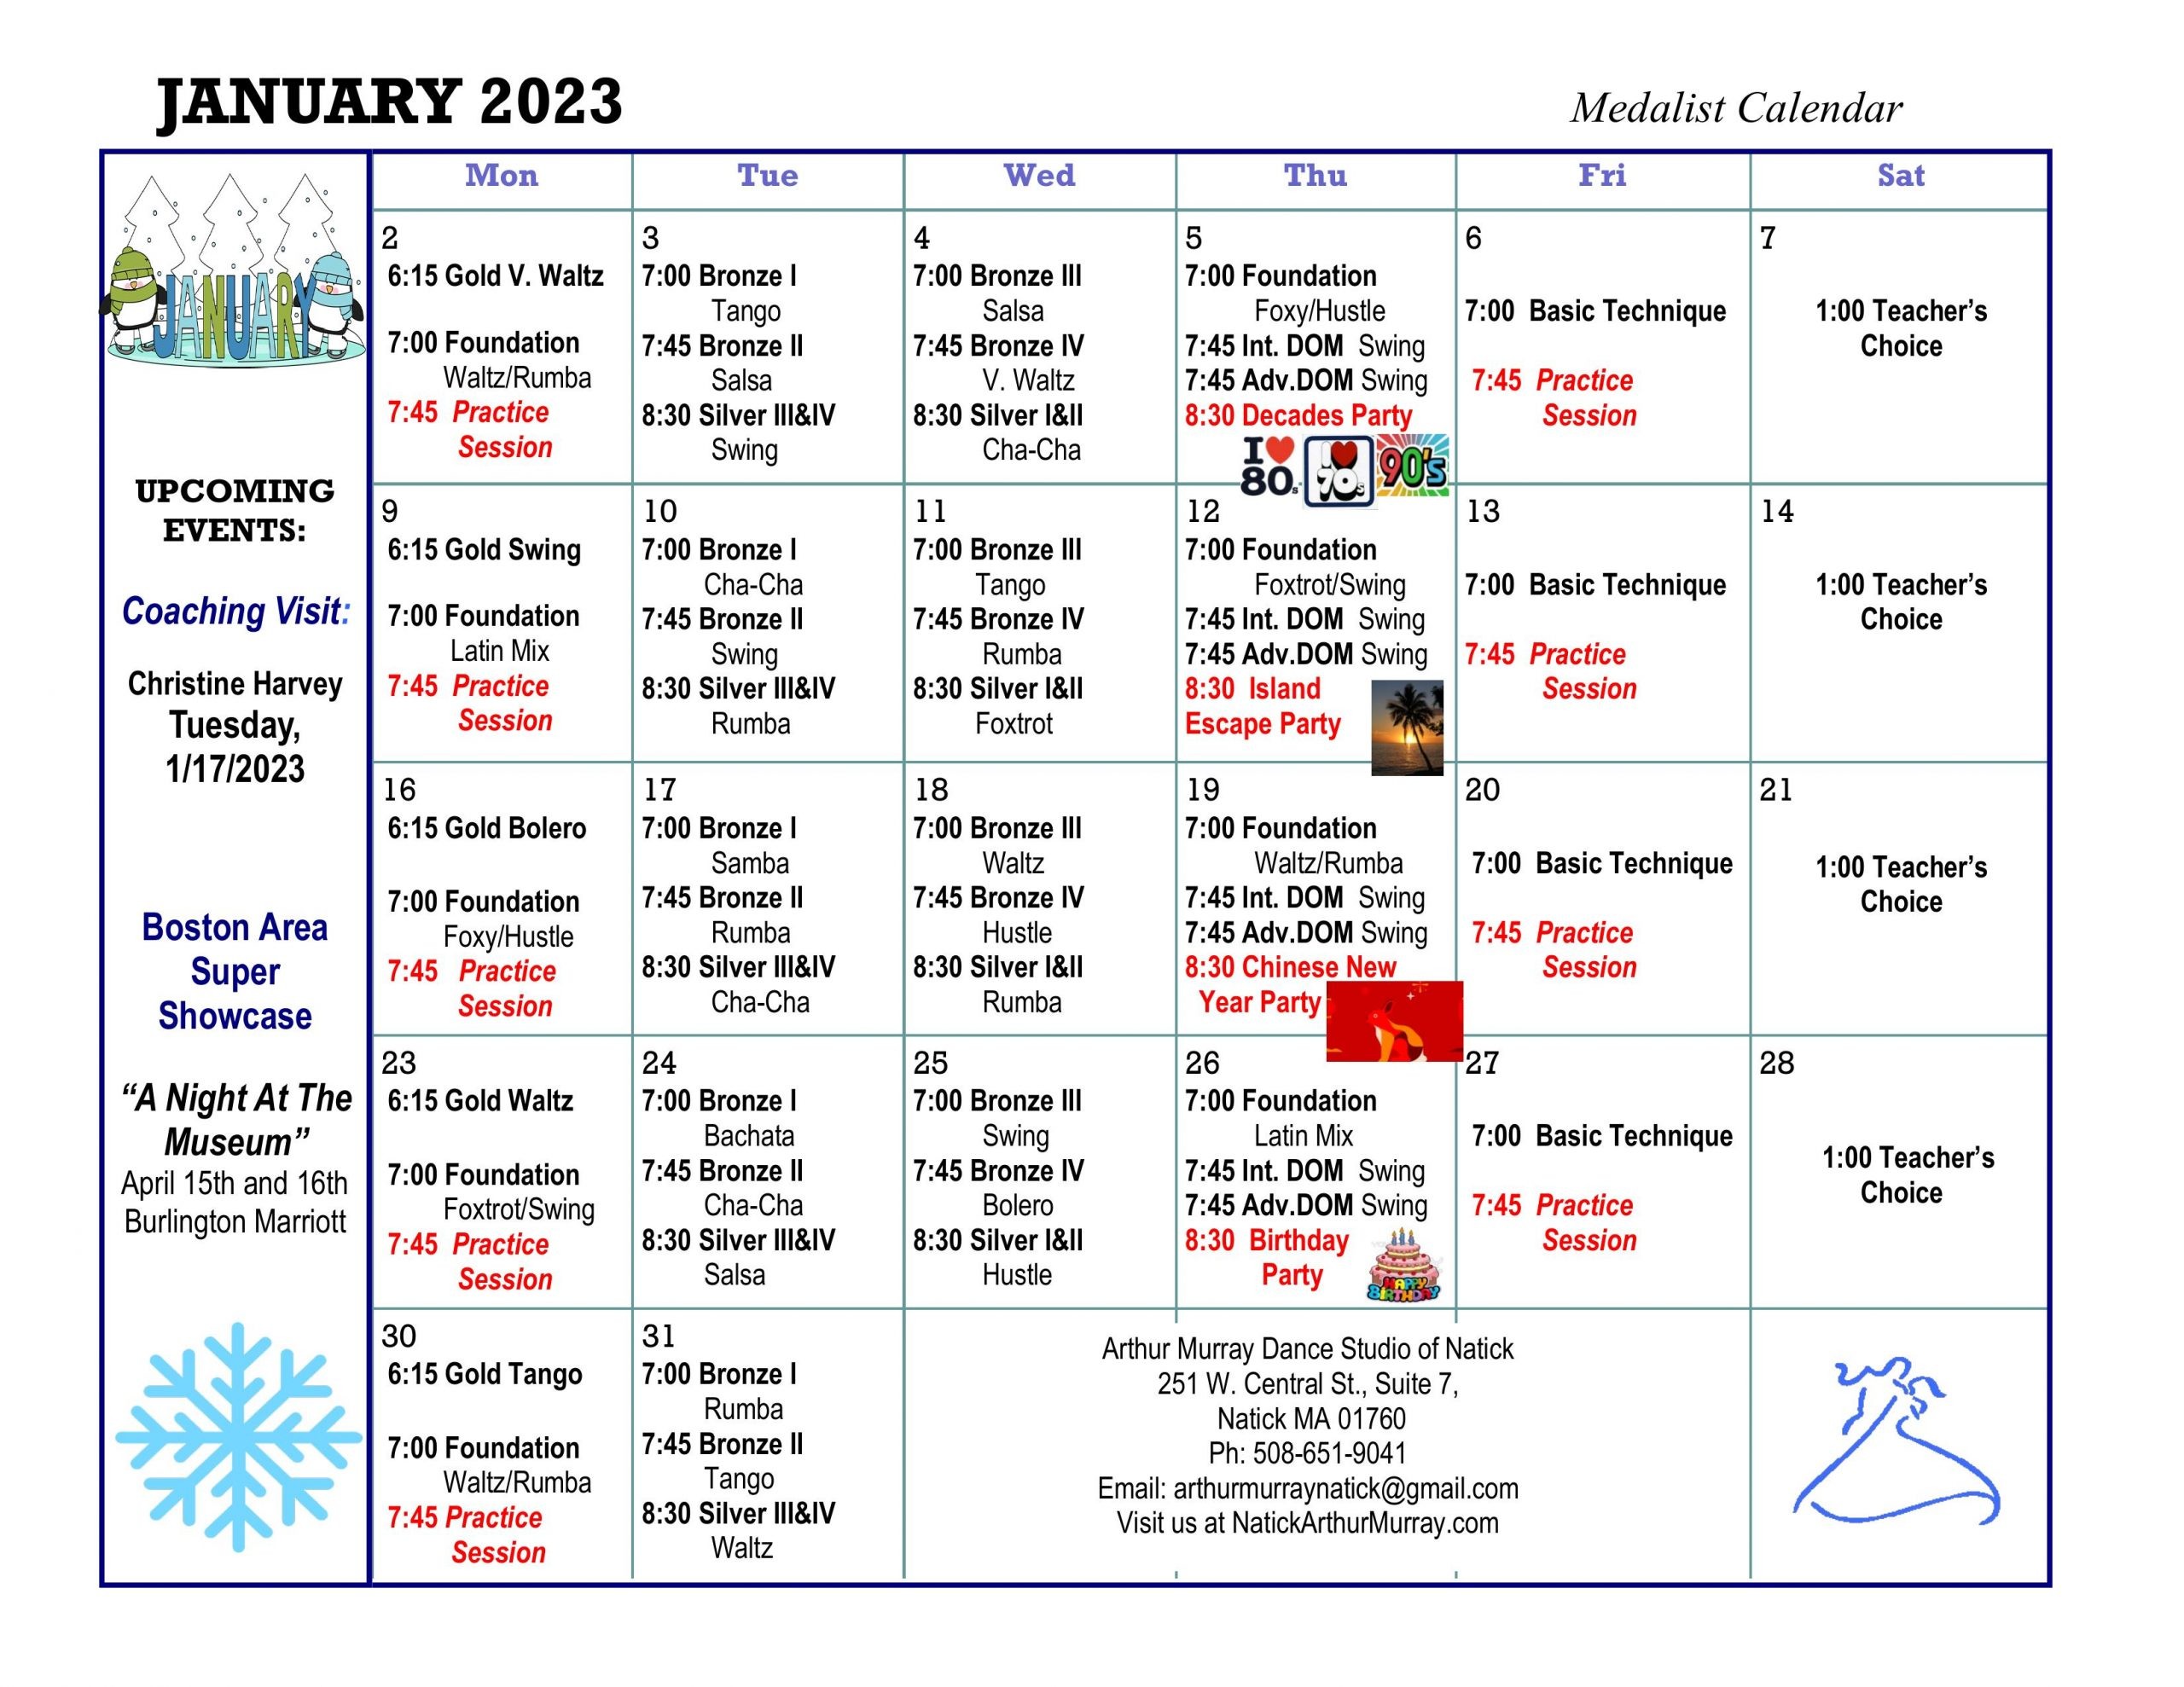 Dance Studio Natick Medalist Jan Calendar